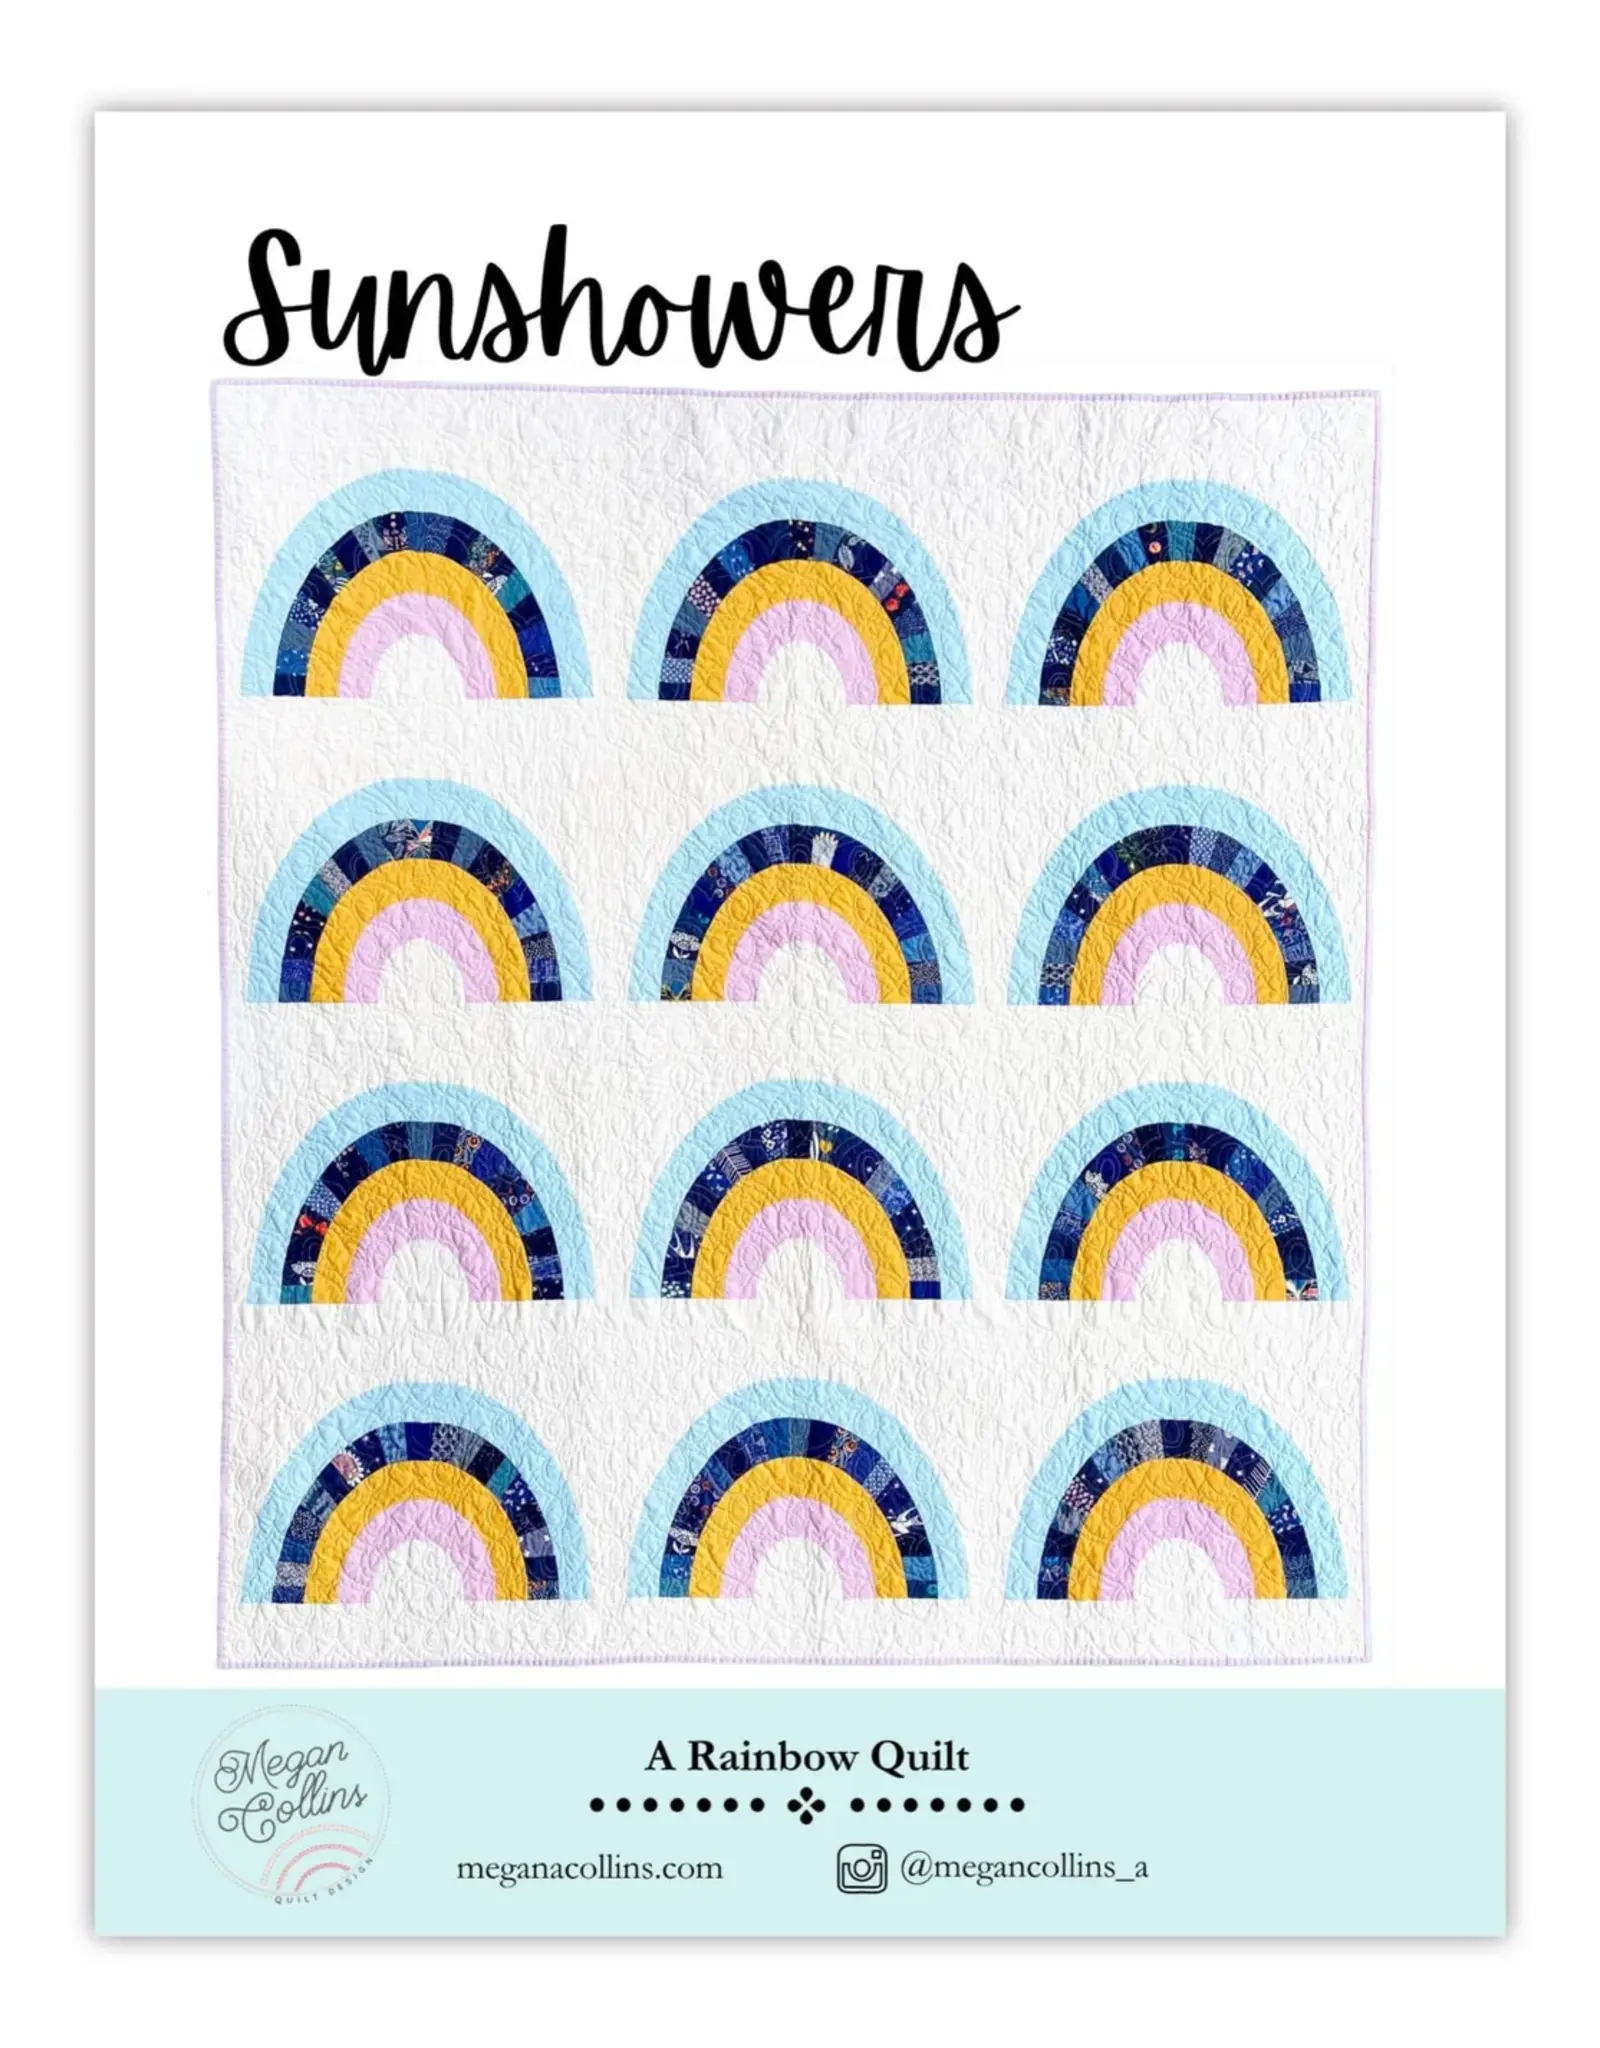 Sunshowers Baby Quilt Kit 50" x 43"